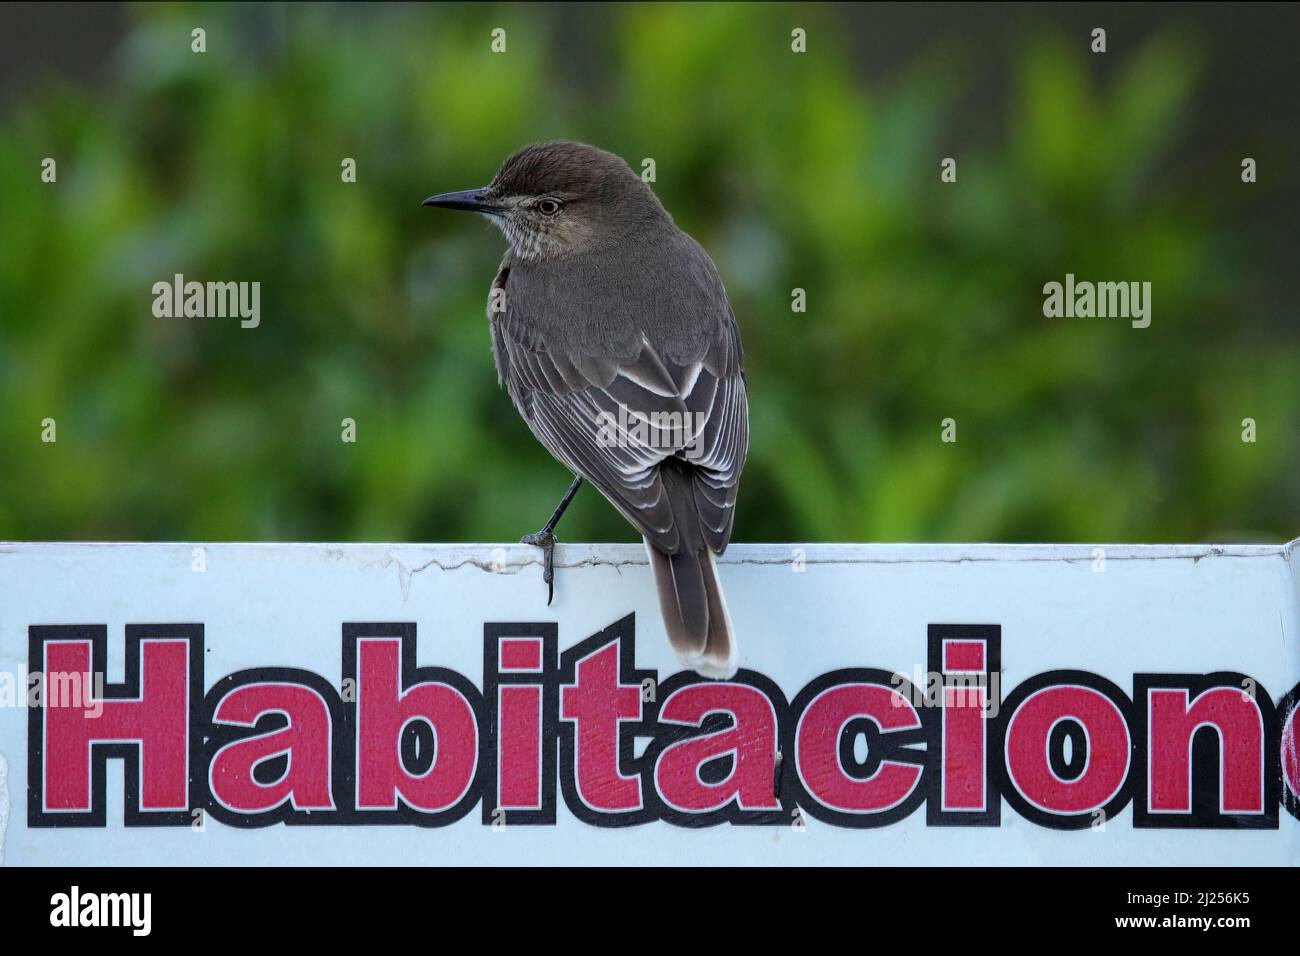 Black-billed shrike-tyrant, Agriornis montanus, grey bird from Antisana mountains national park in Ecuador. Tyrant in the nature habitat, sitting on t Stock Photo